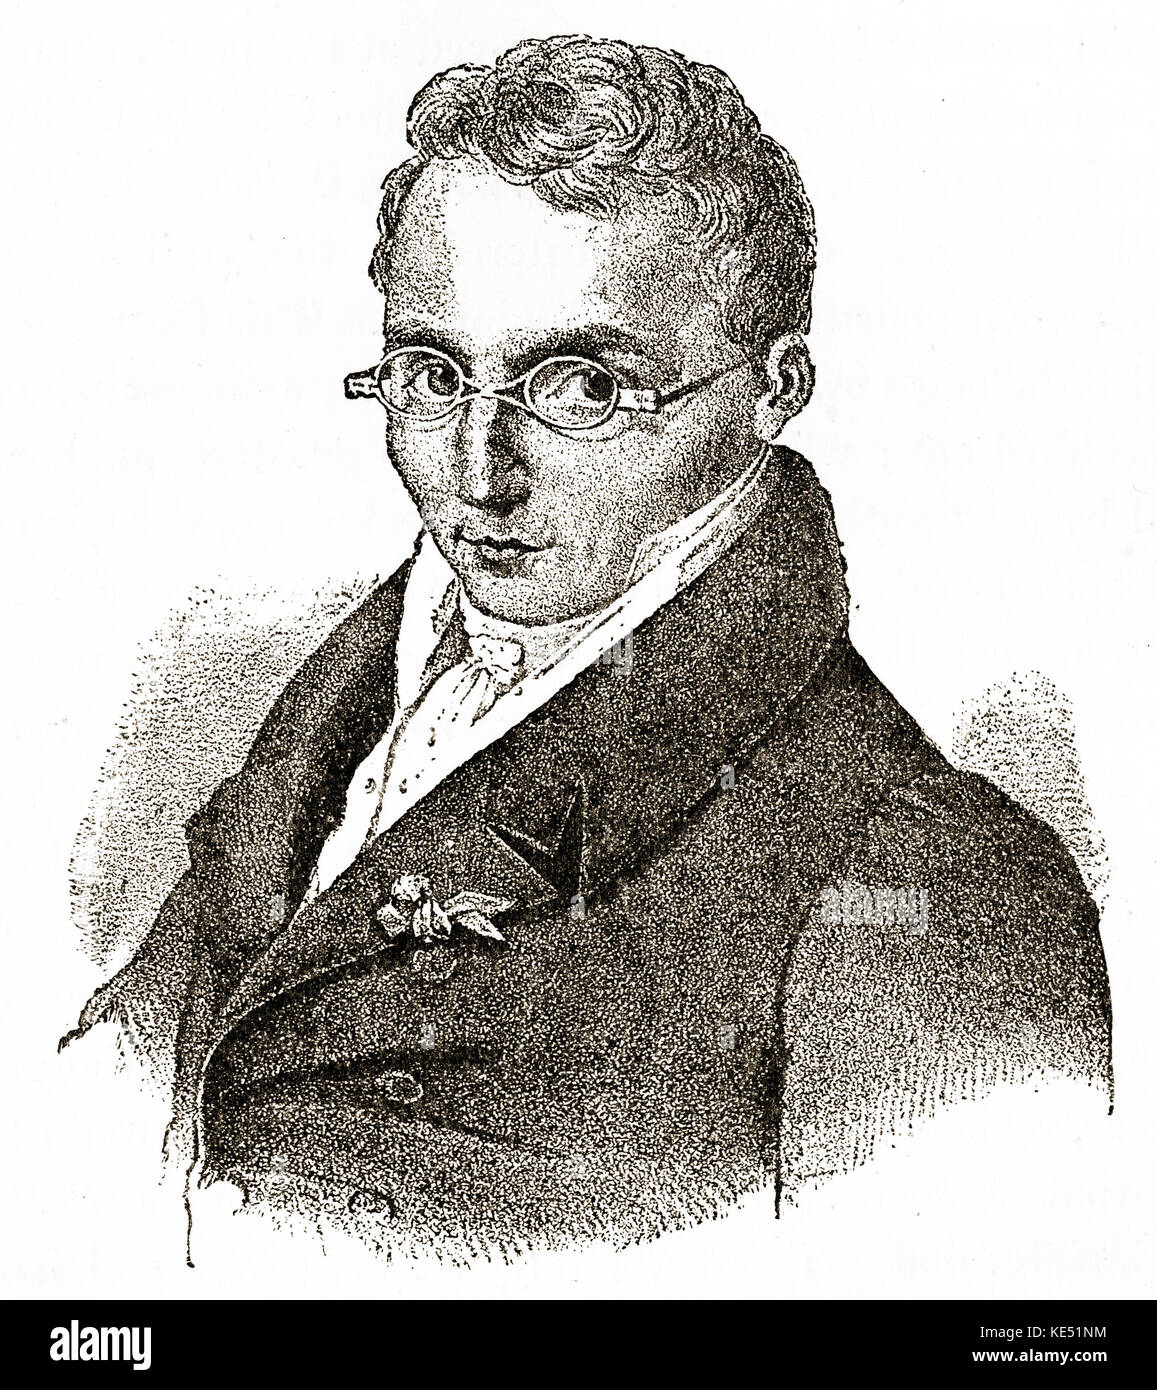 (Louis Joseph) Ferdinand Hérold - Ritratto del francese opera compositore. 28 Gennaio 1791 - 19 gennaio 1833. Foto Stock